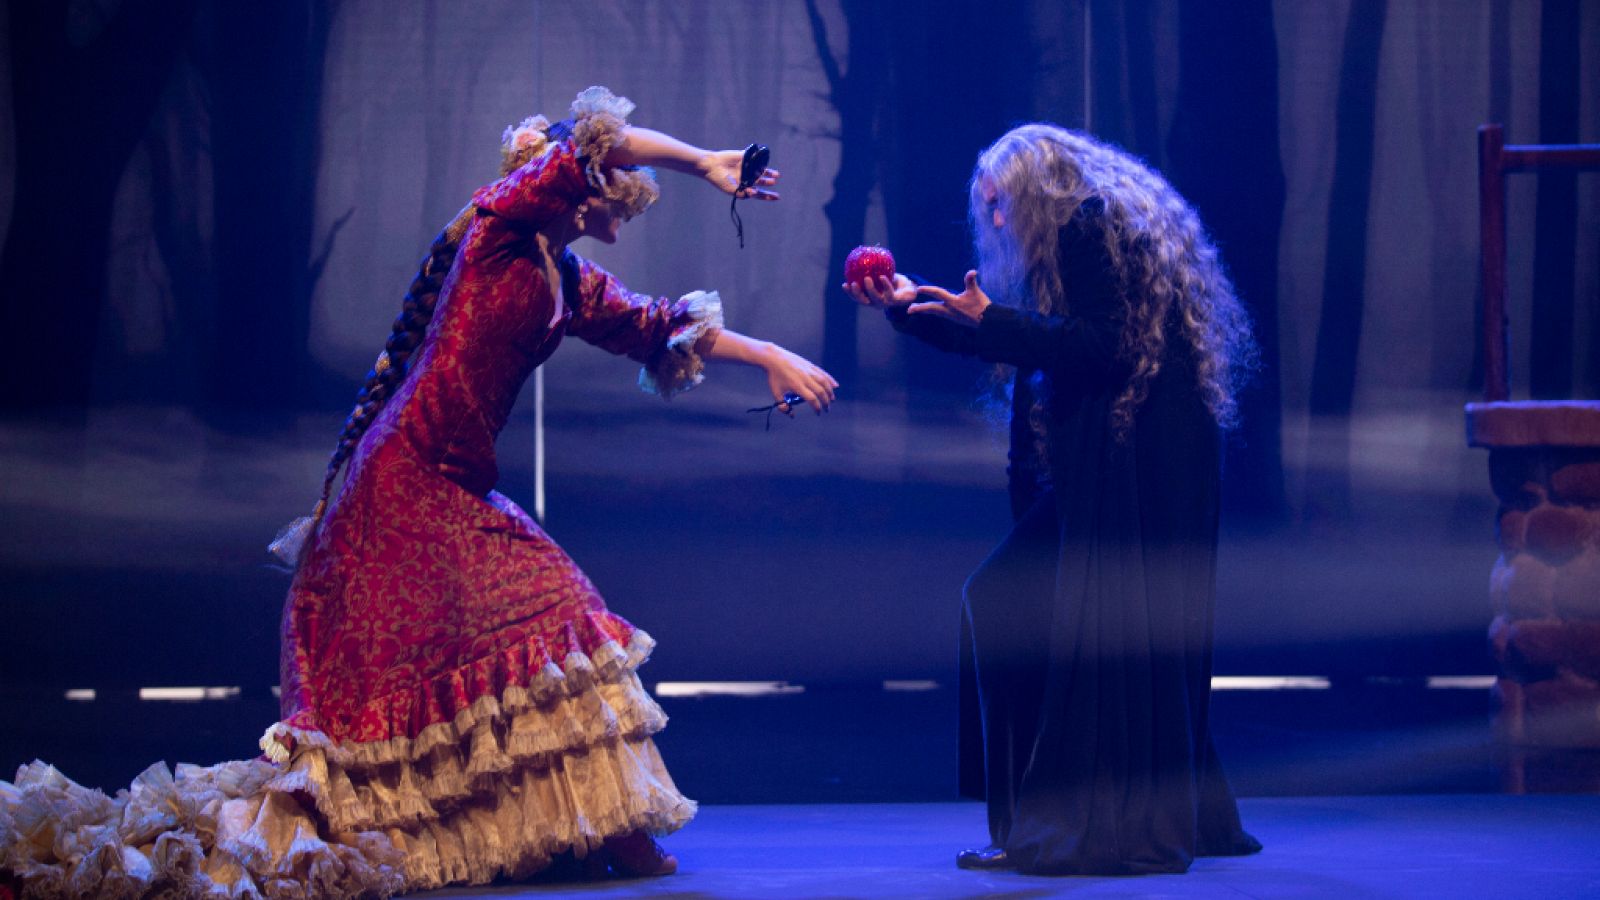 The Dancer - Actuación de Macarena en la segunda Semifinal